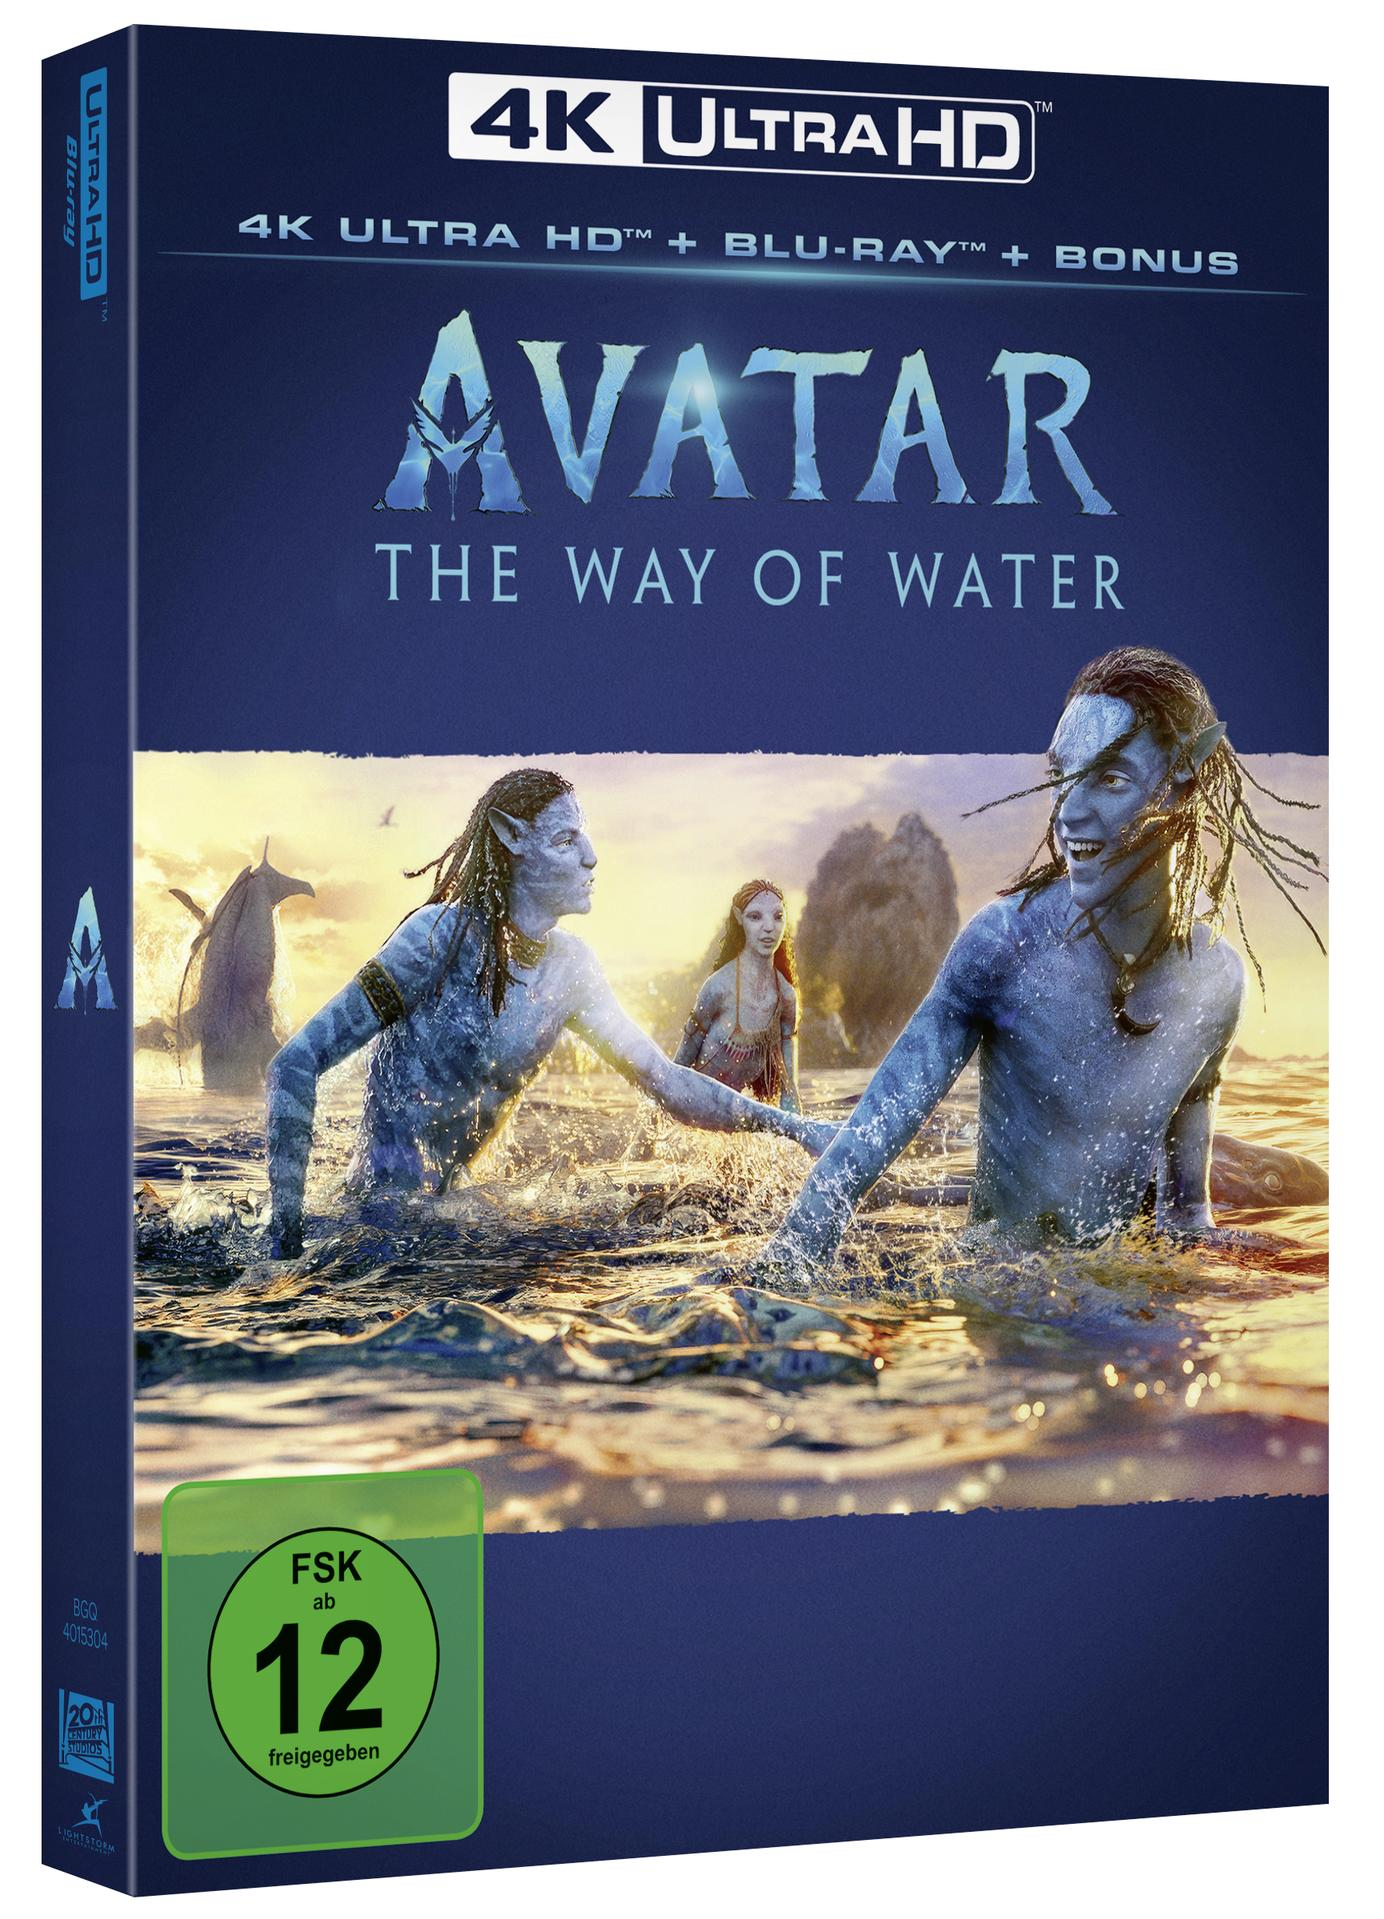 Avatar: The Way of Water HD Ultra 4K Blu-ray Blu-ray 